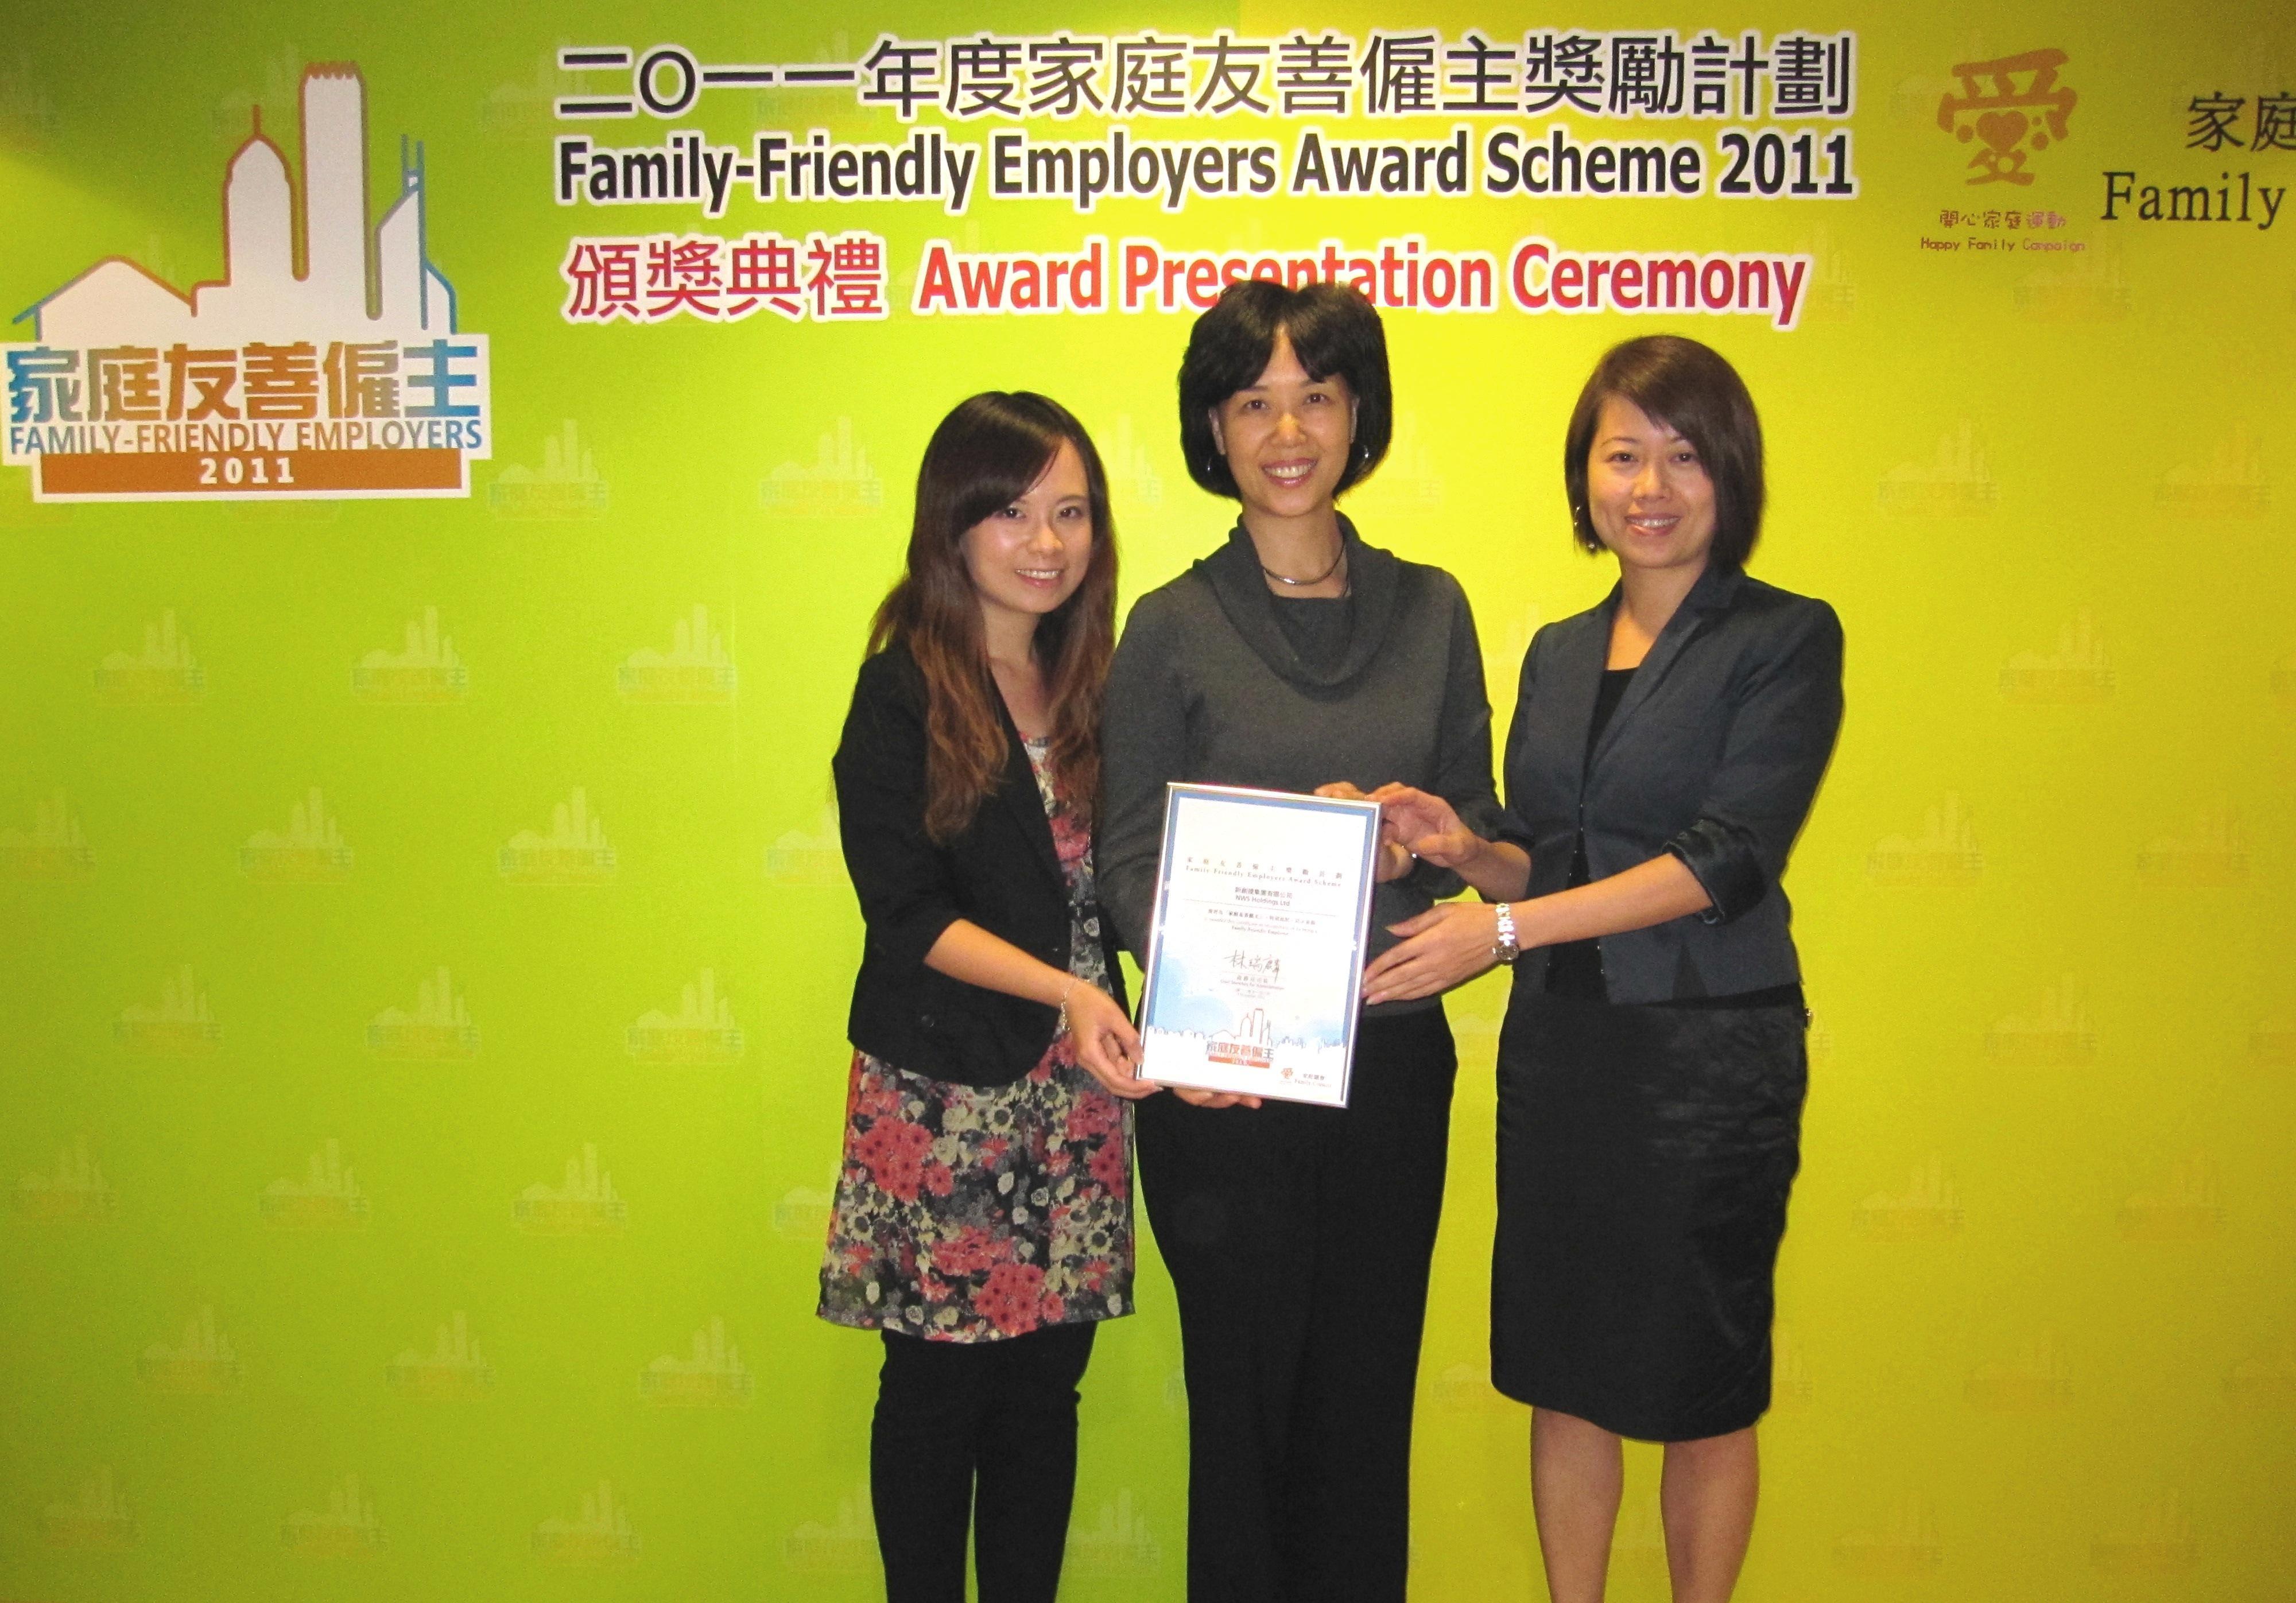 NWS Holdings garnered dual human resources awards